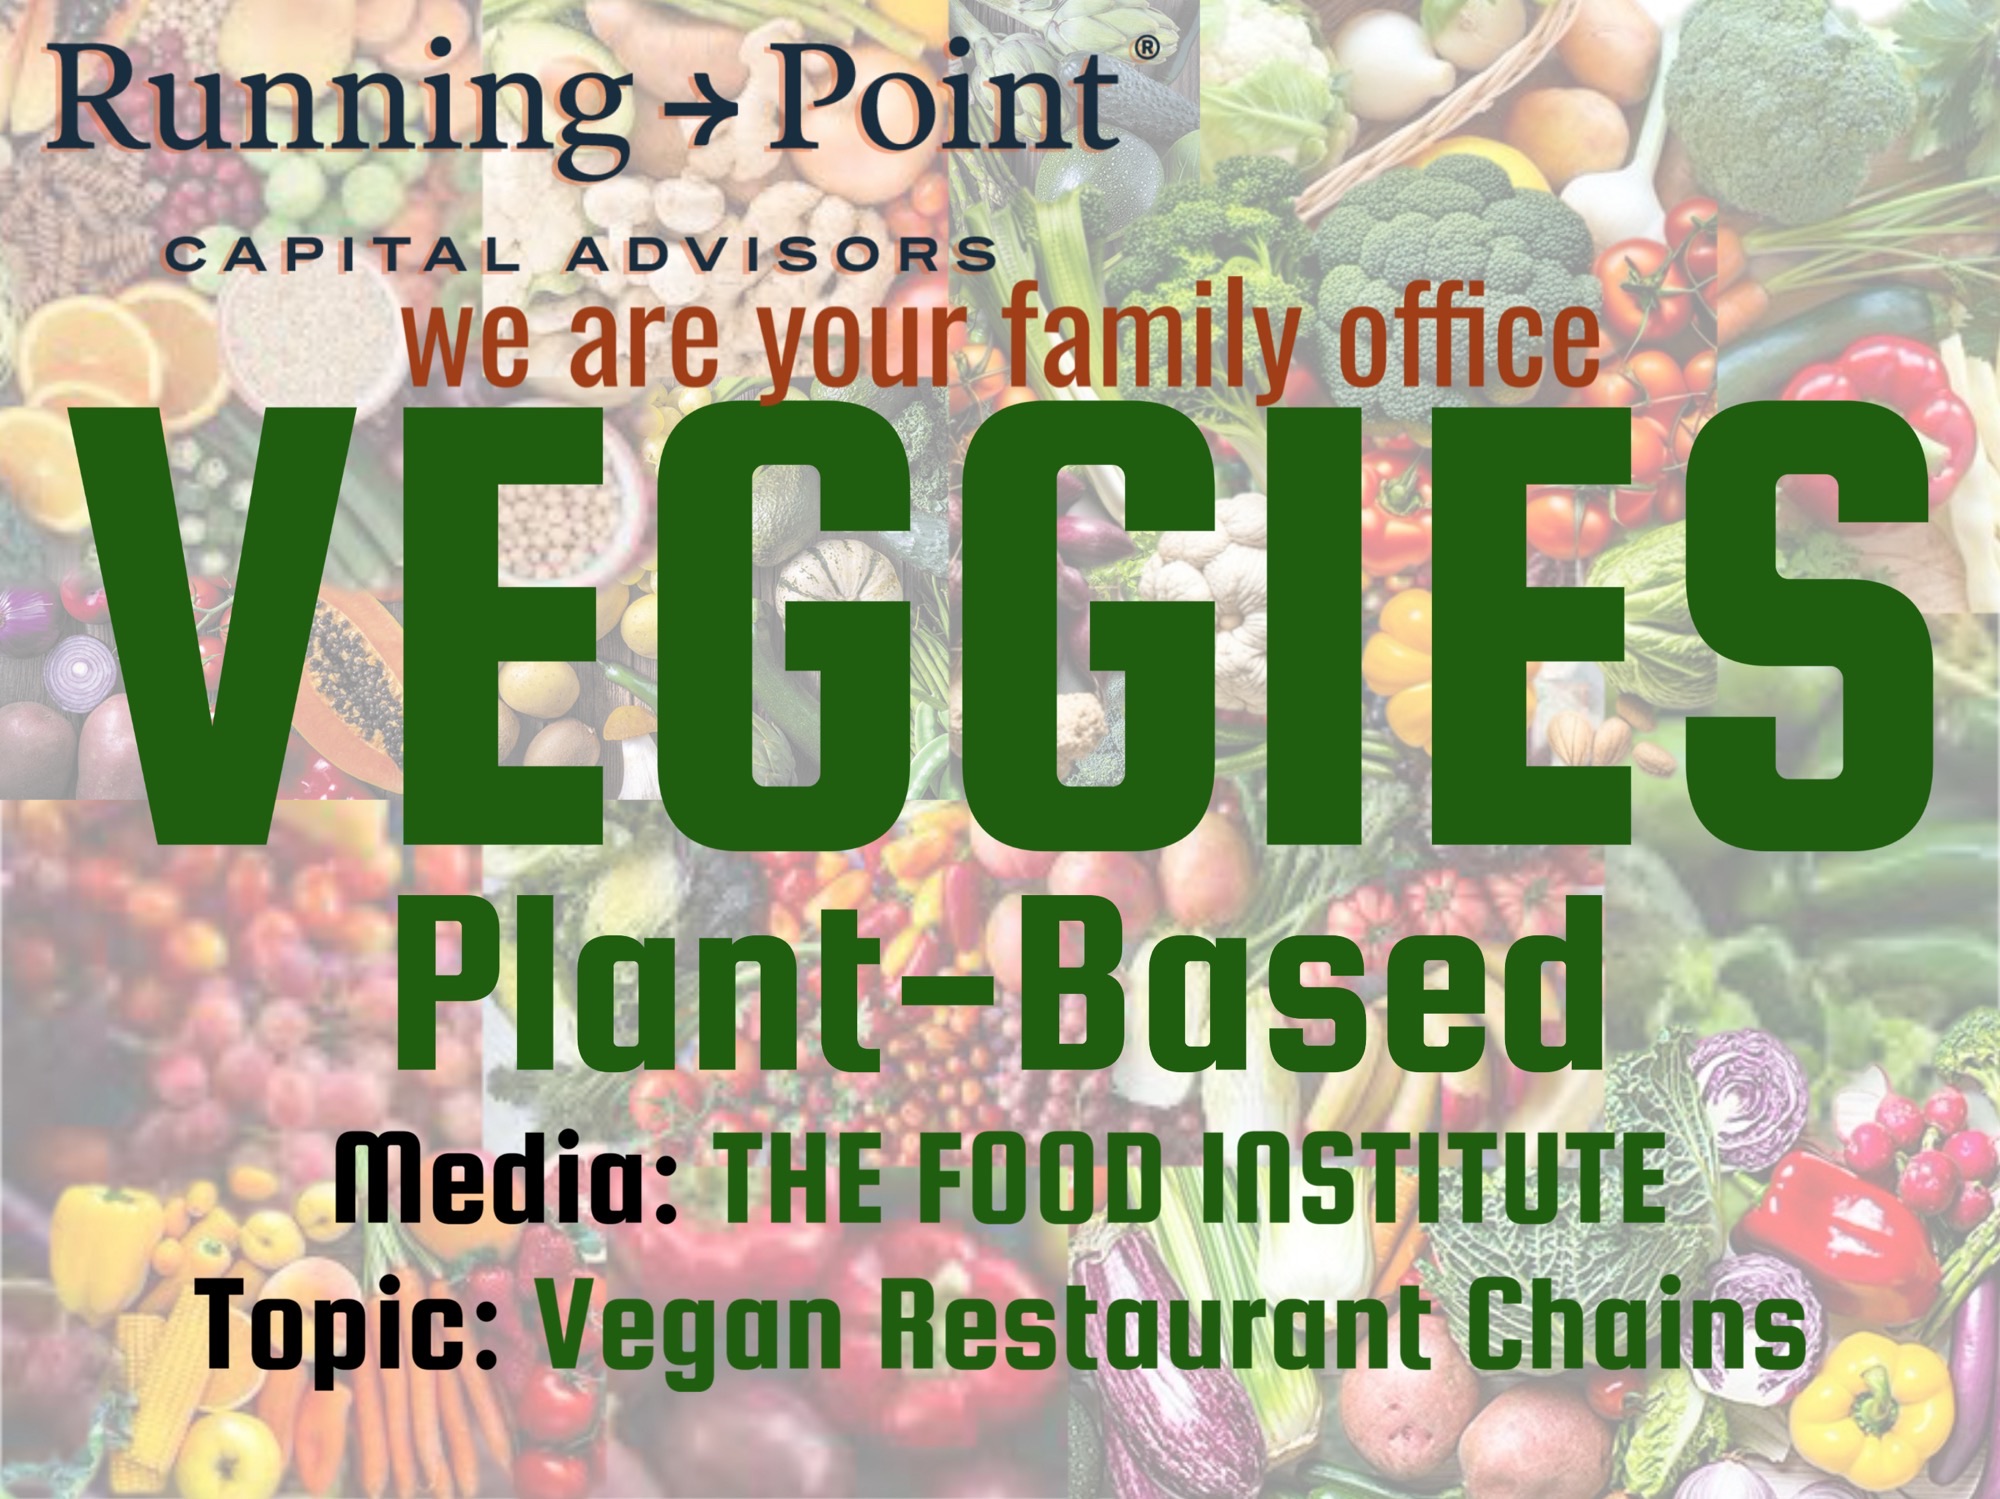 The Food Institute: The Next Level of Vegan Restaurants